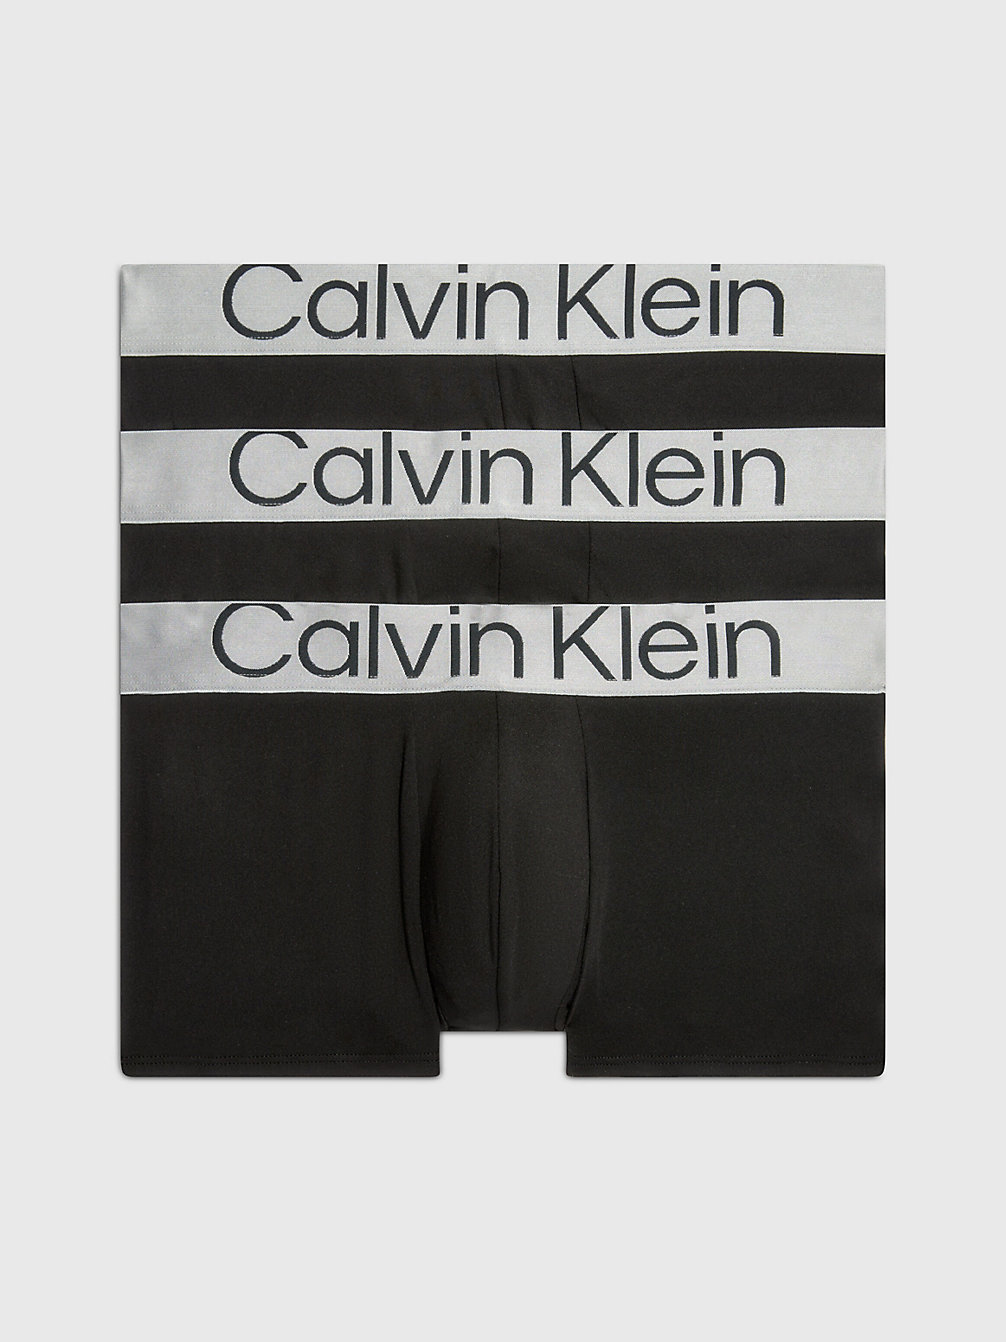 BLACK > Комплект боксеров низкой посадки 3 шт. - Steel Micro > undefined женщины - Calvin Klein